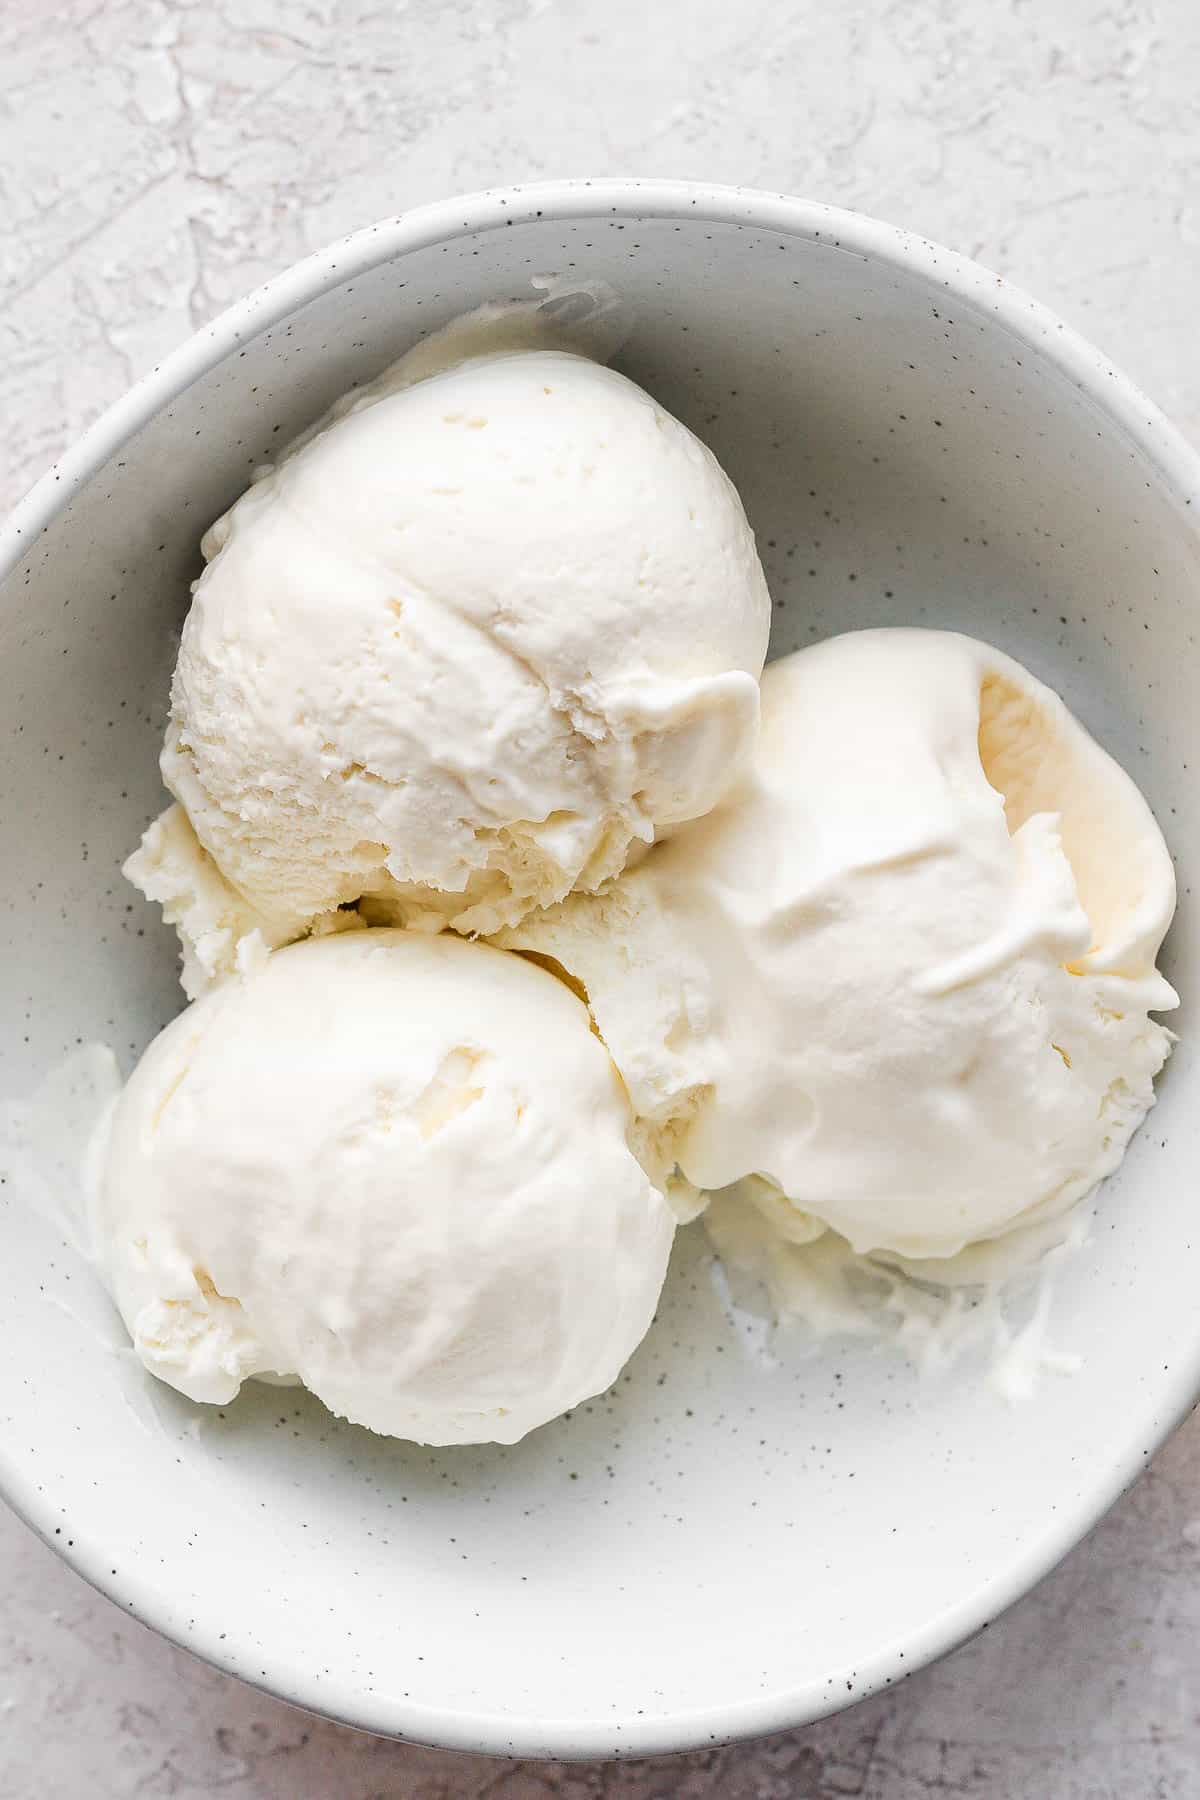 3 scoops of homemade vanilla ice cream in a small white bowl